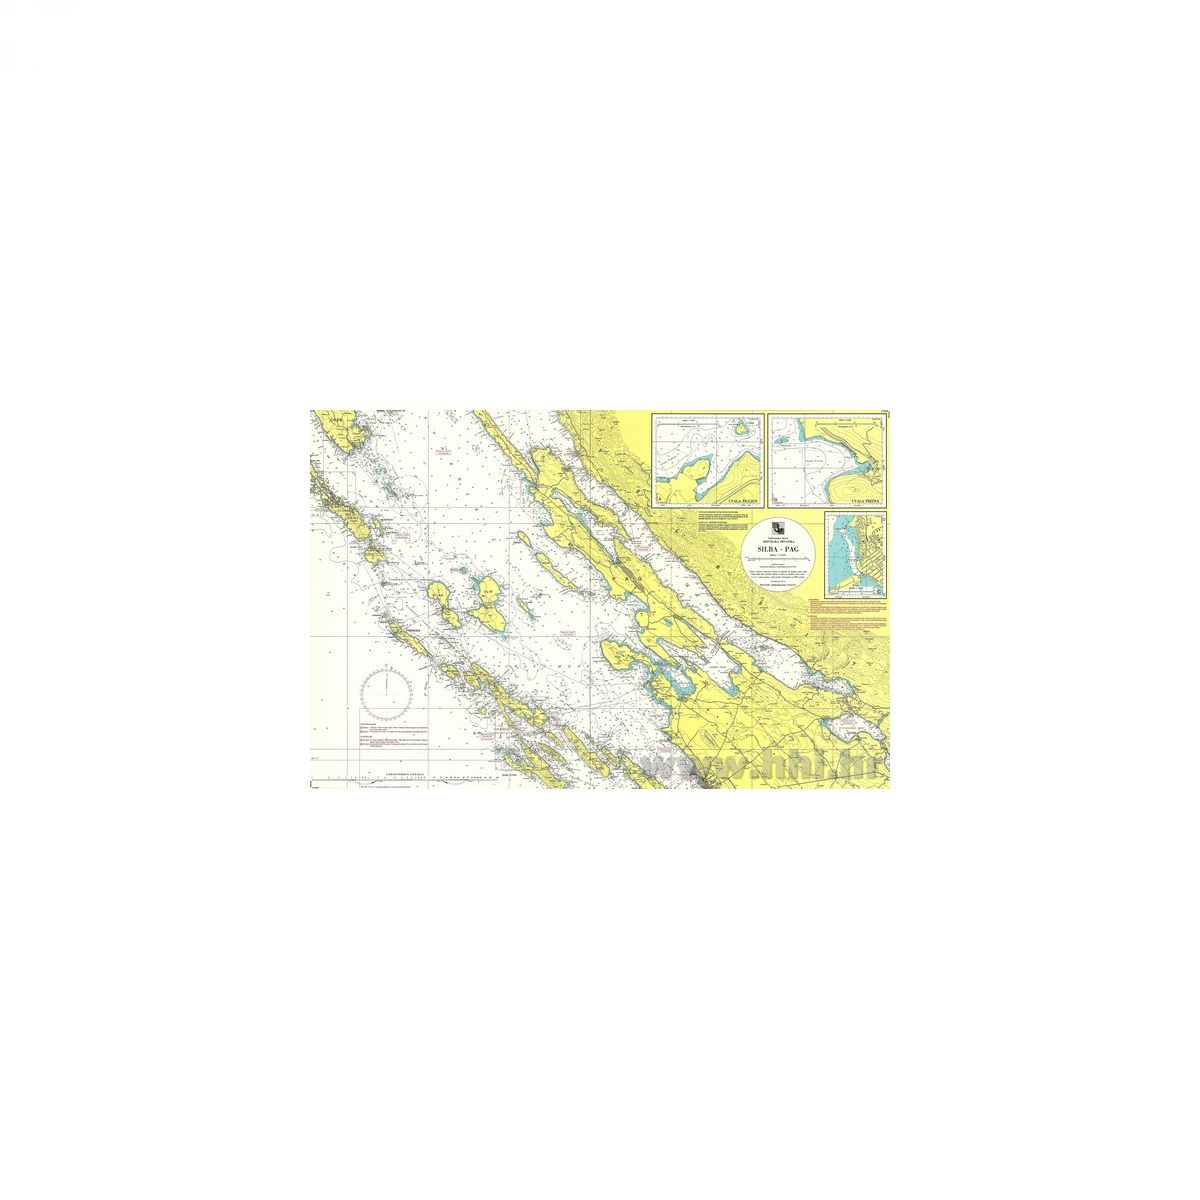 pomorska karta paga Karta pomorska 100 19 obalna Silba – Pag (Žigljen,Prizna,Pag  pomorska karta paga